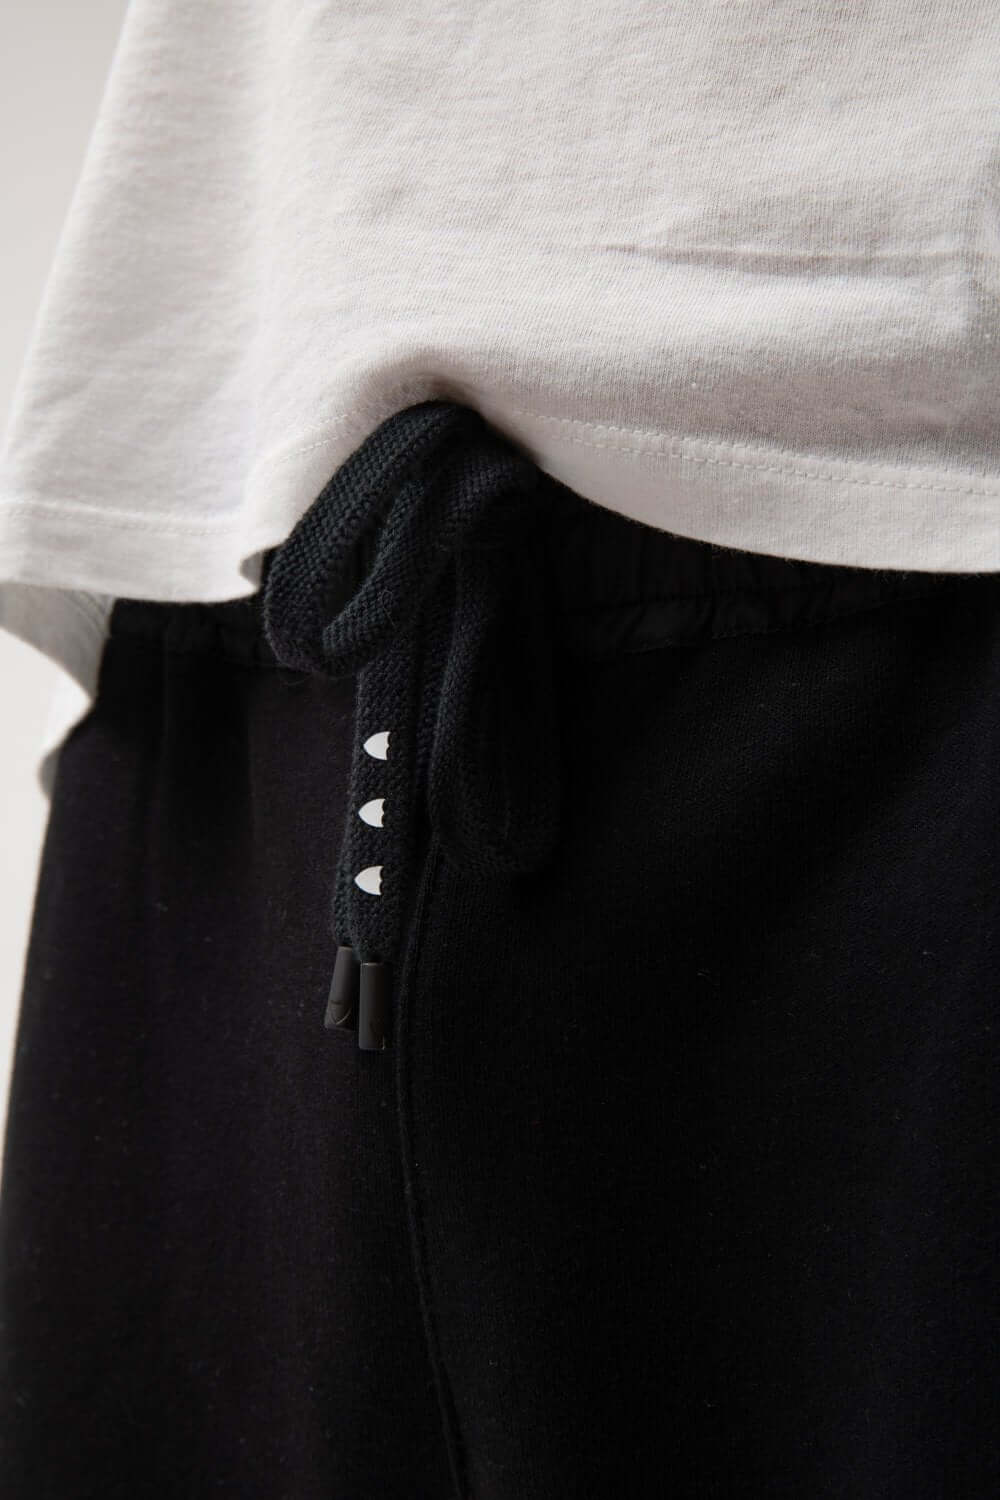 HTC BASIC PANTS Black basic pants. Elastic waistband with drawstring. Side pockets. 93% Viscose 7% Elastane. Made in EU HTC LOS ANGELES